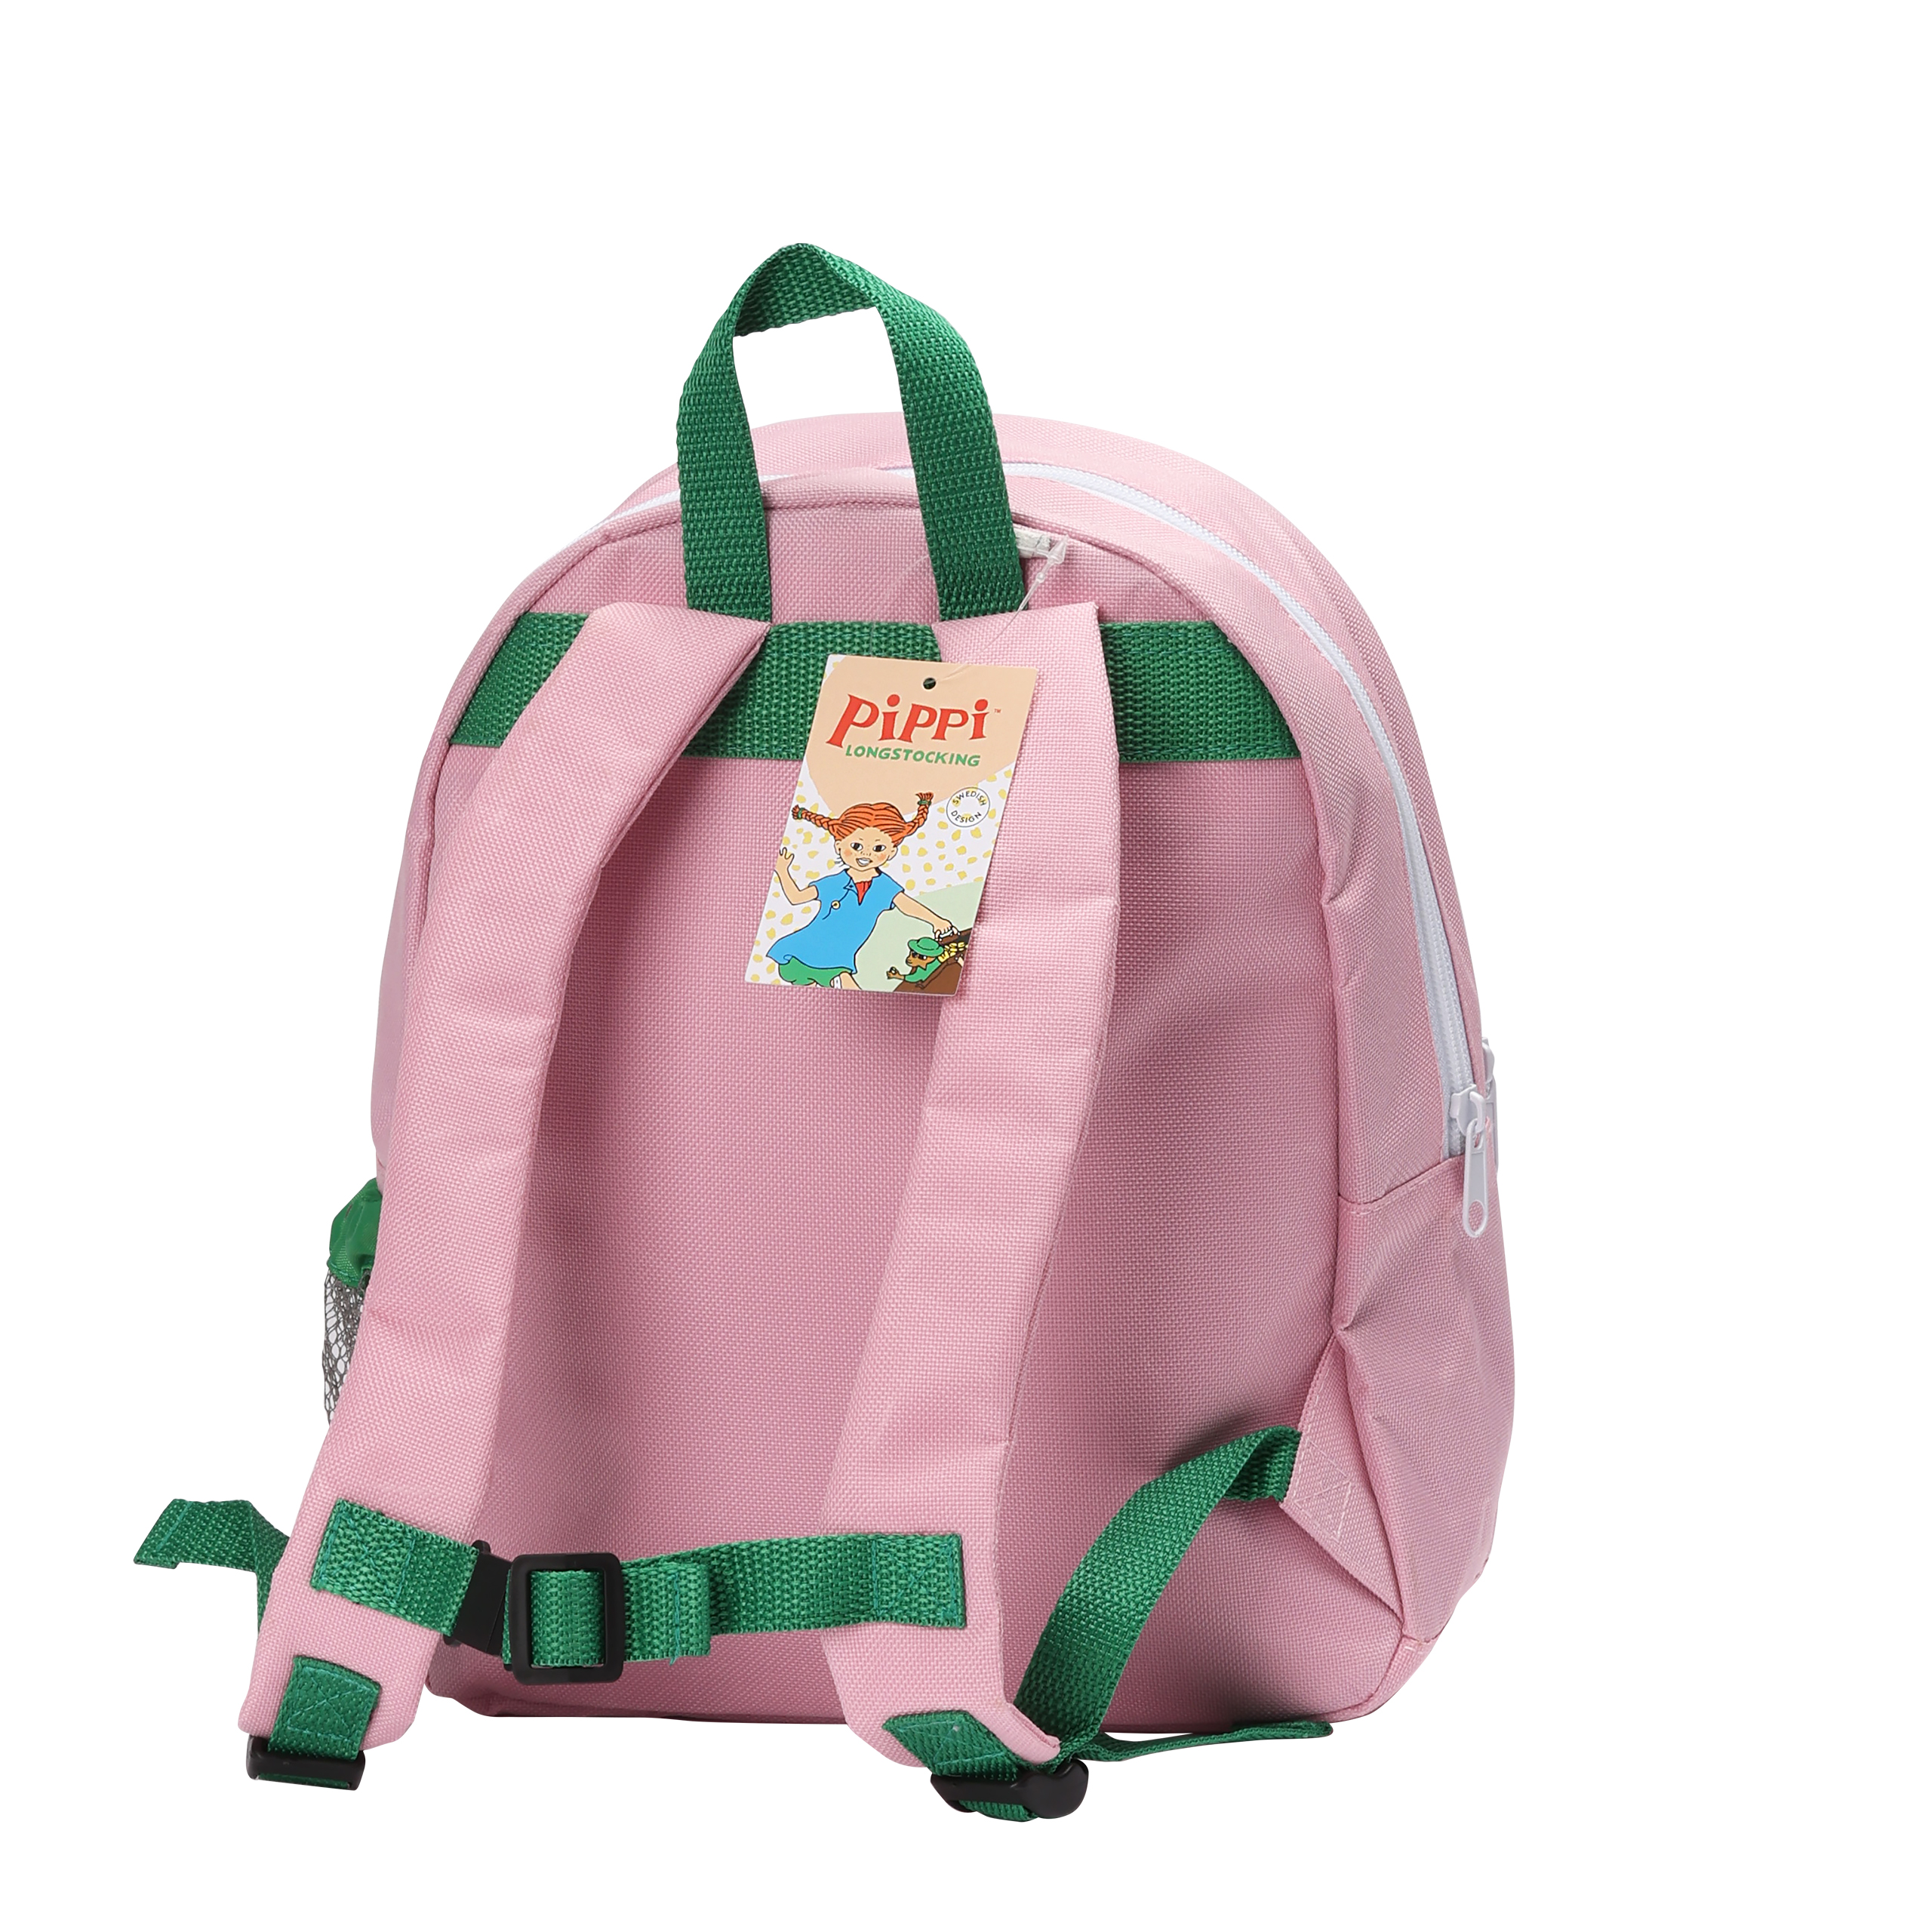 Pippi Longstocking peppi pitkätossu lasten laukku reppu vaaleanpunainen